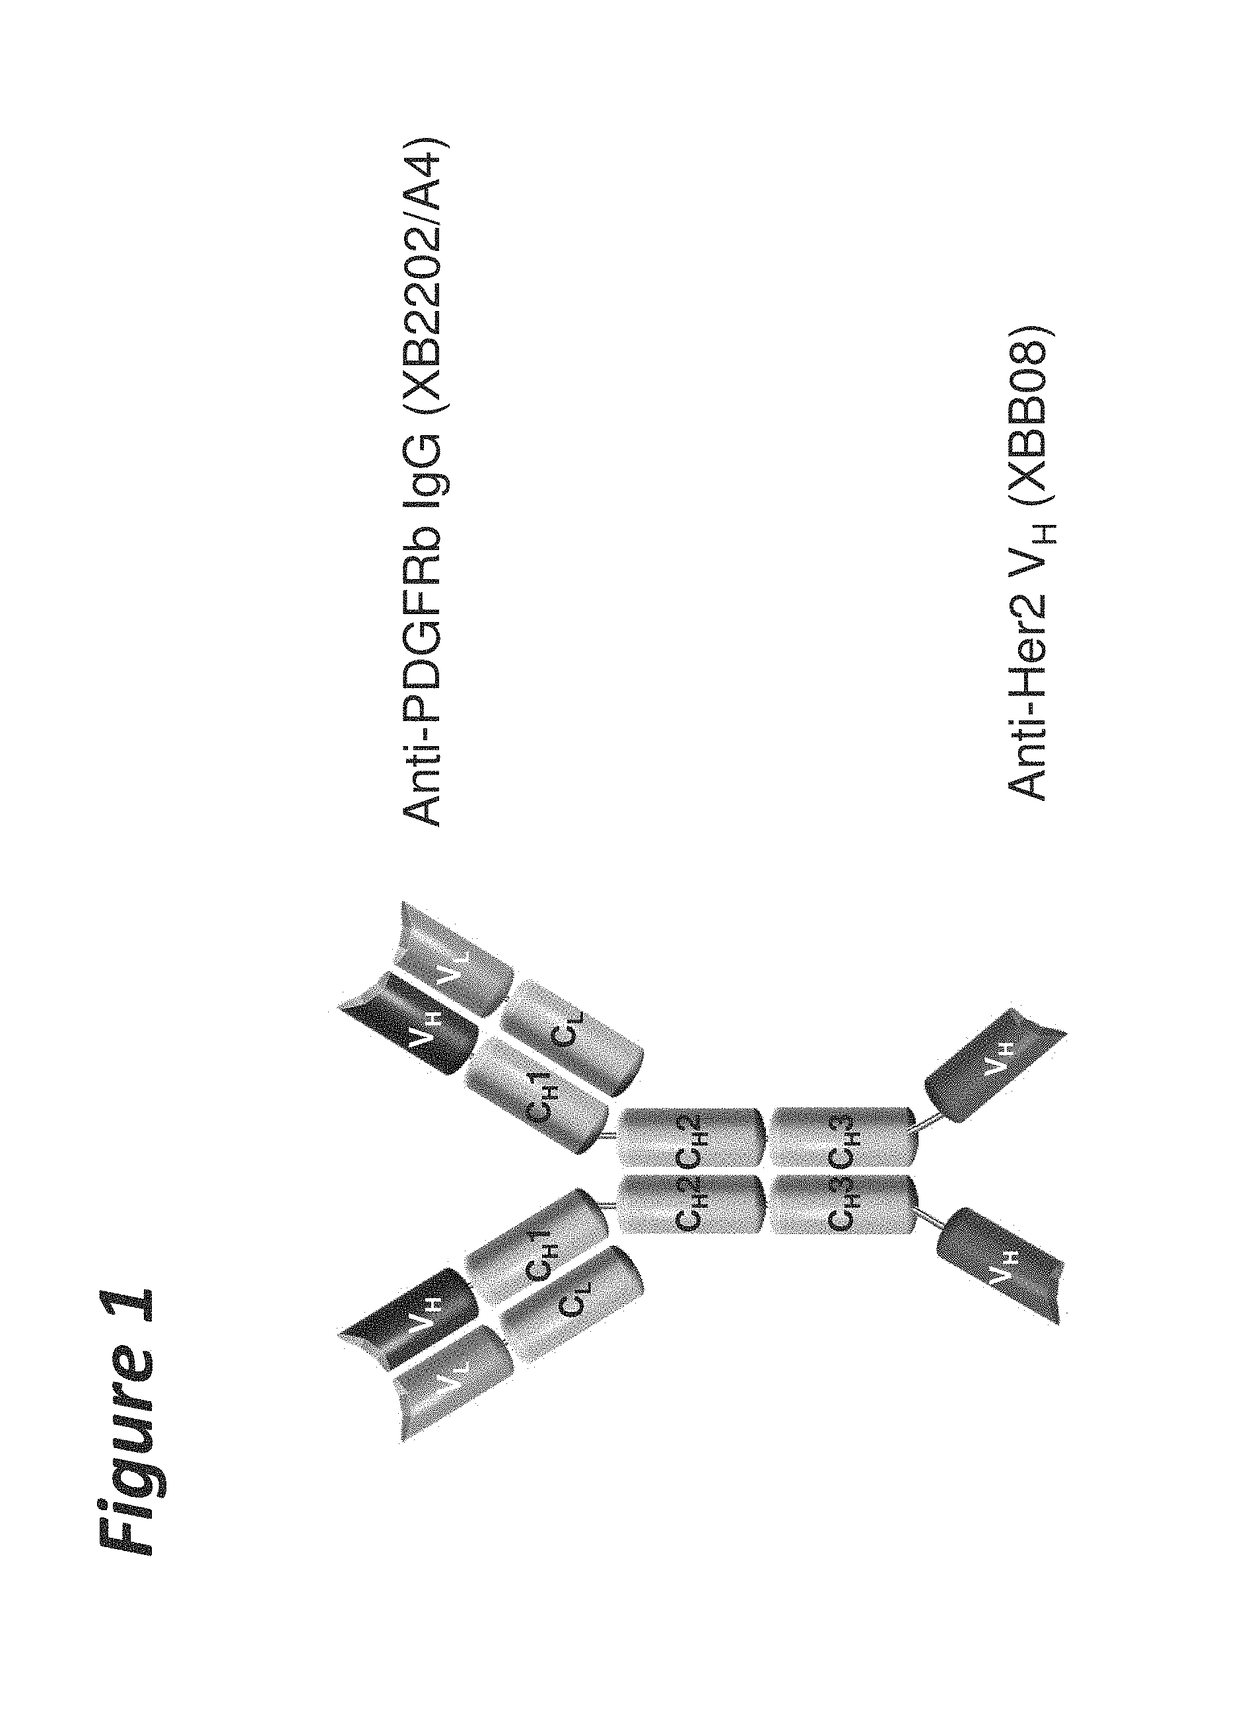 Bi-specific antigen-binding polypeptides